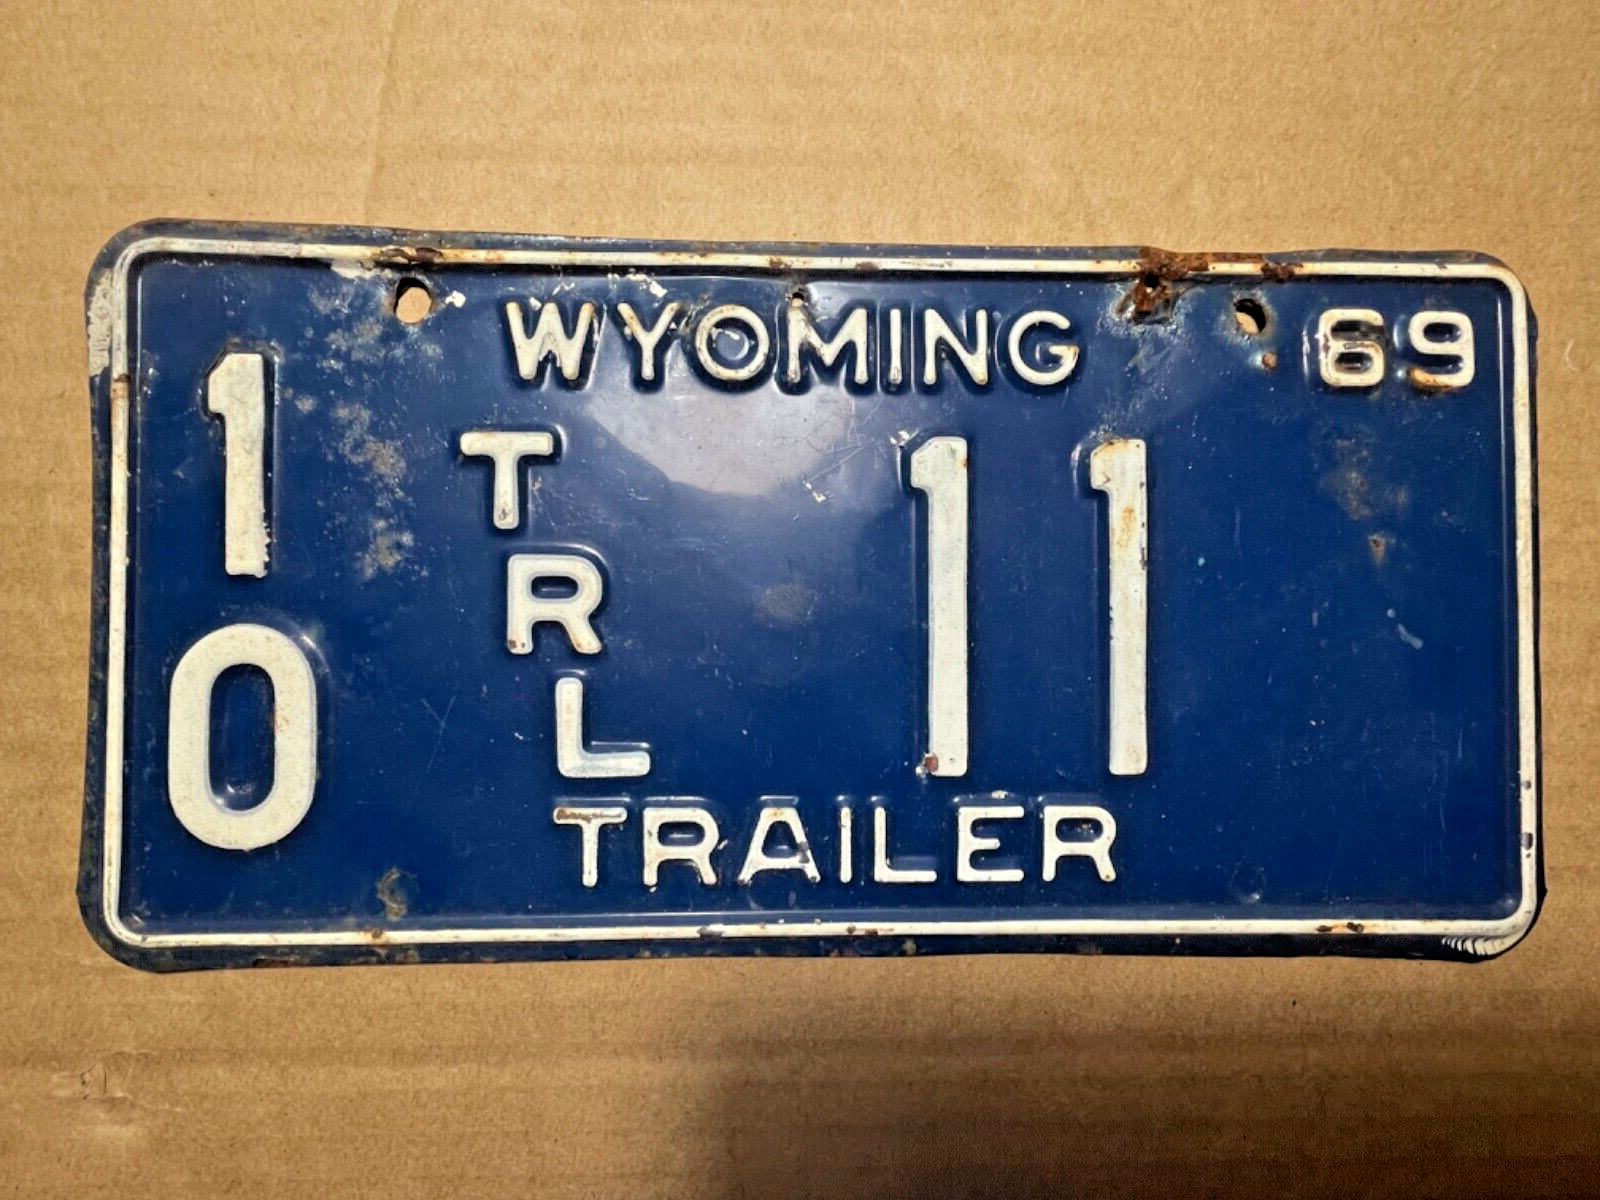 1969 WYOMING Trailer License Plate # 10- 11  Nice Original Low Number